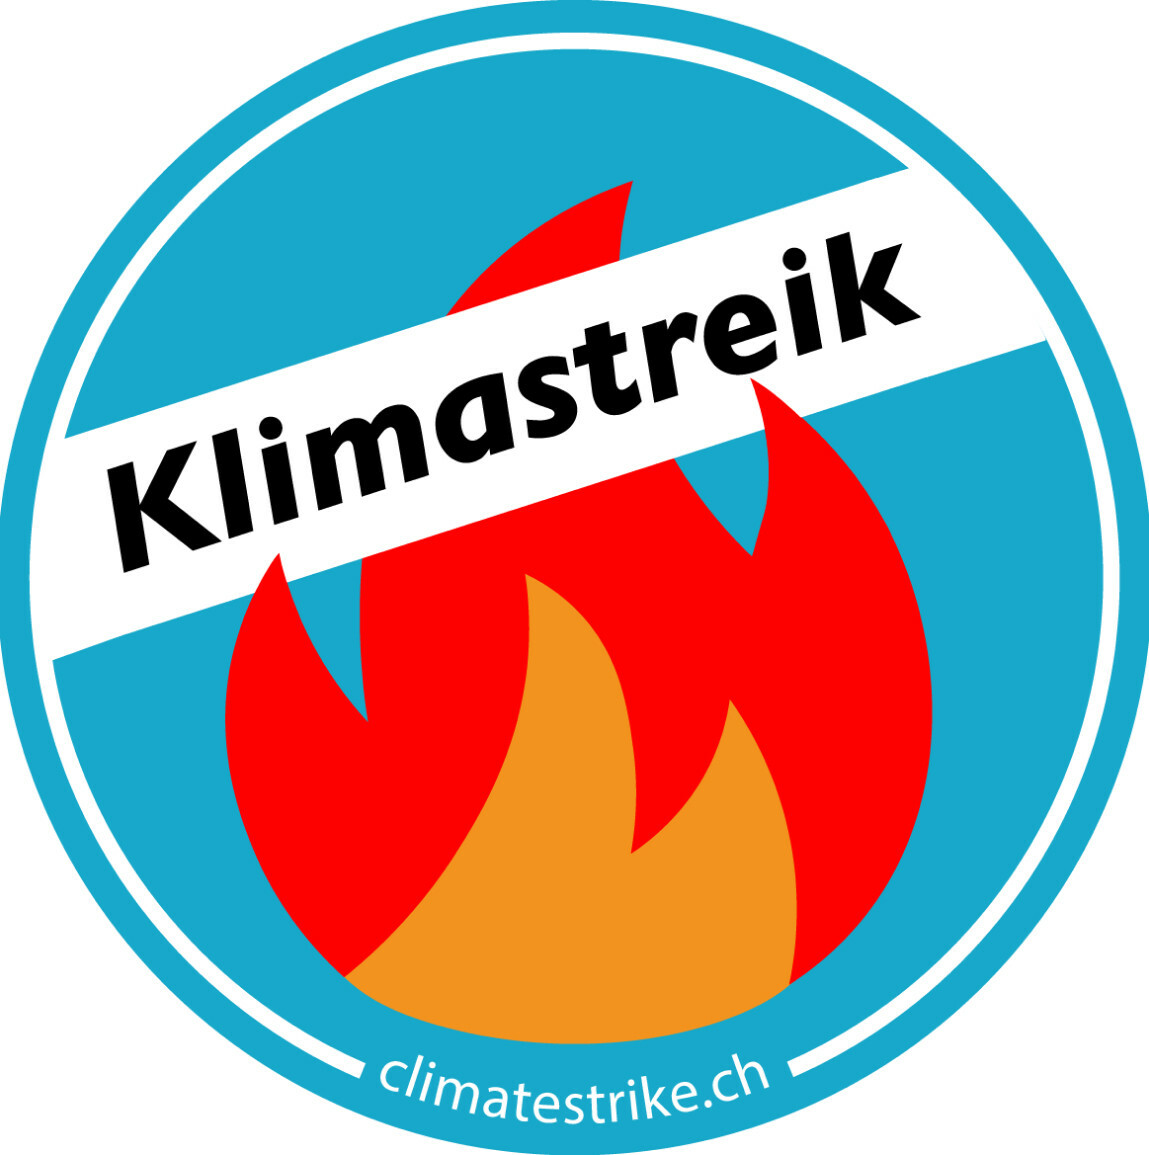 Klimastreik Basel